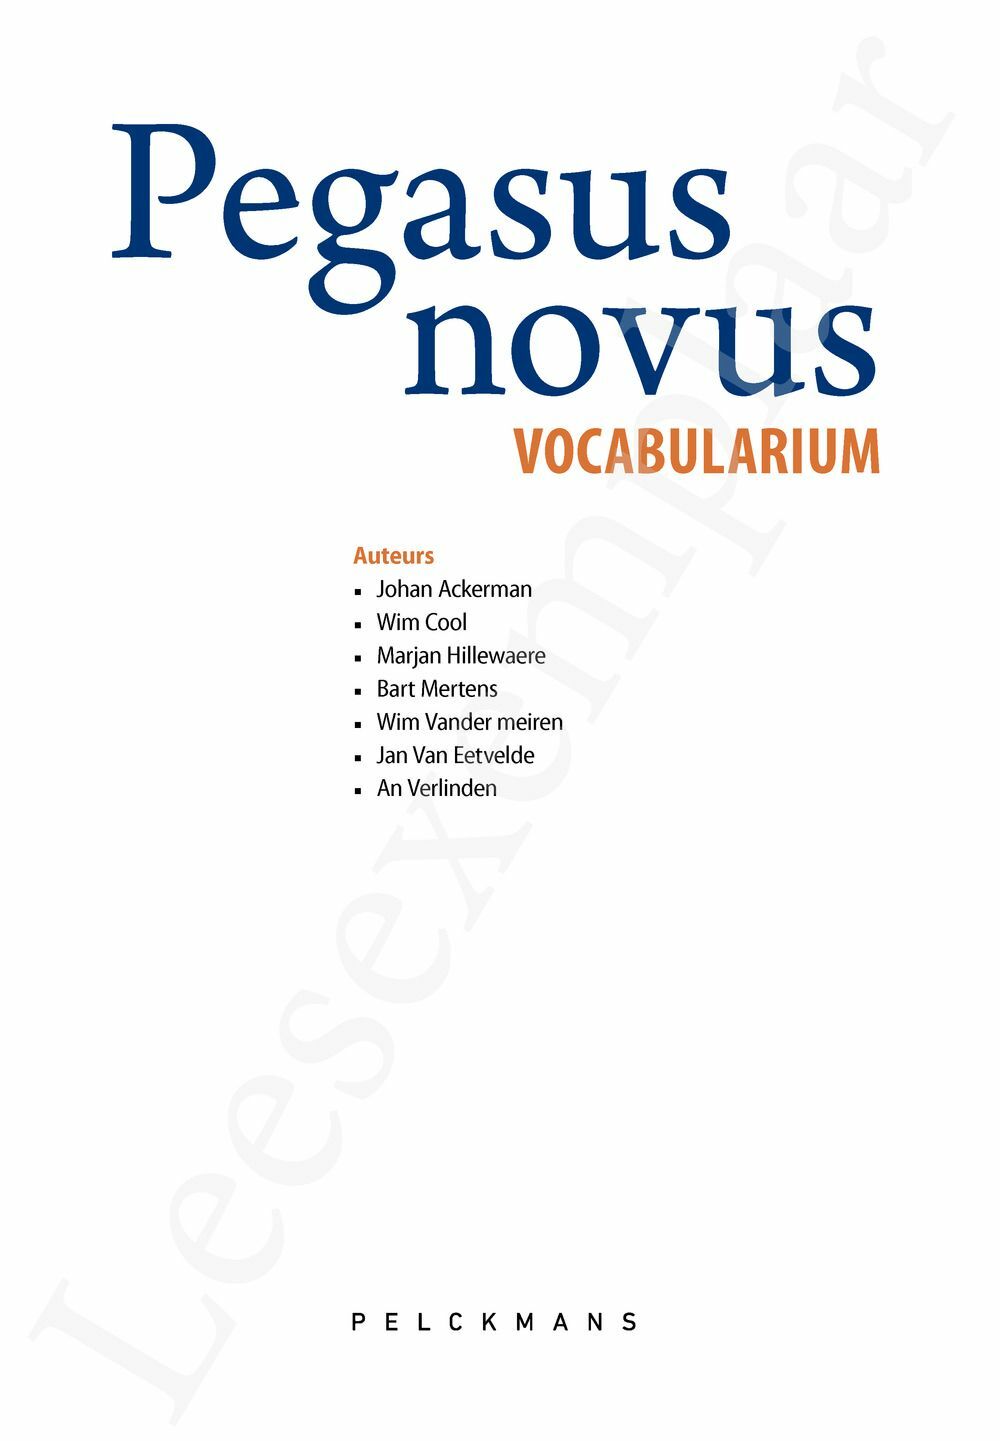 Preview: Pegasus novus Vocabularium (incl. Pelckmans Portaal)